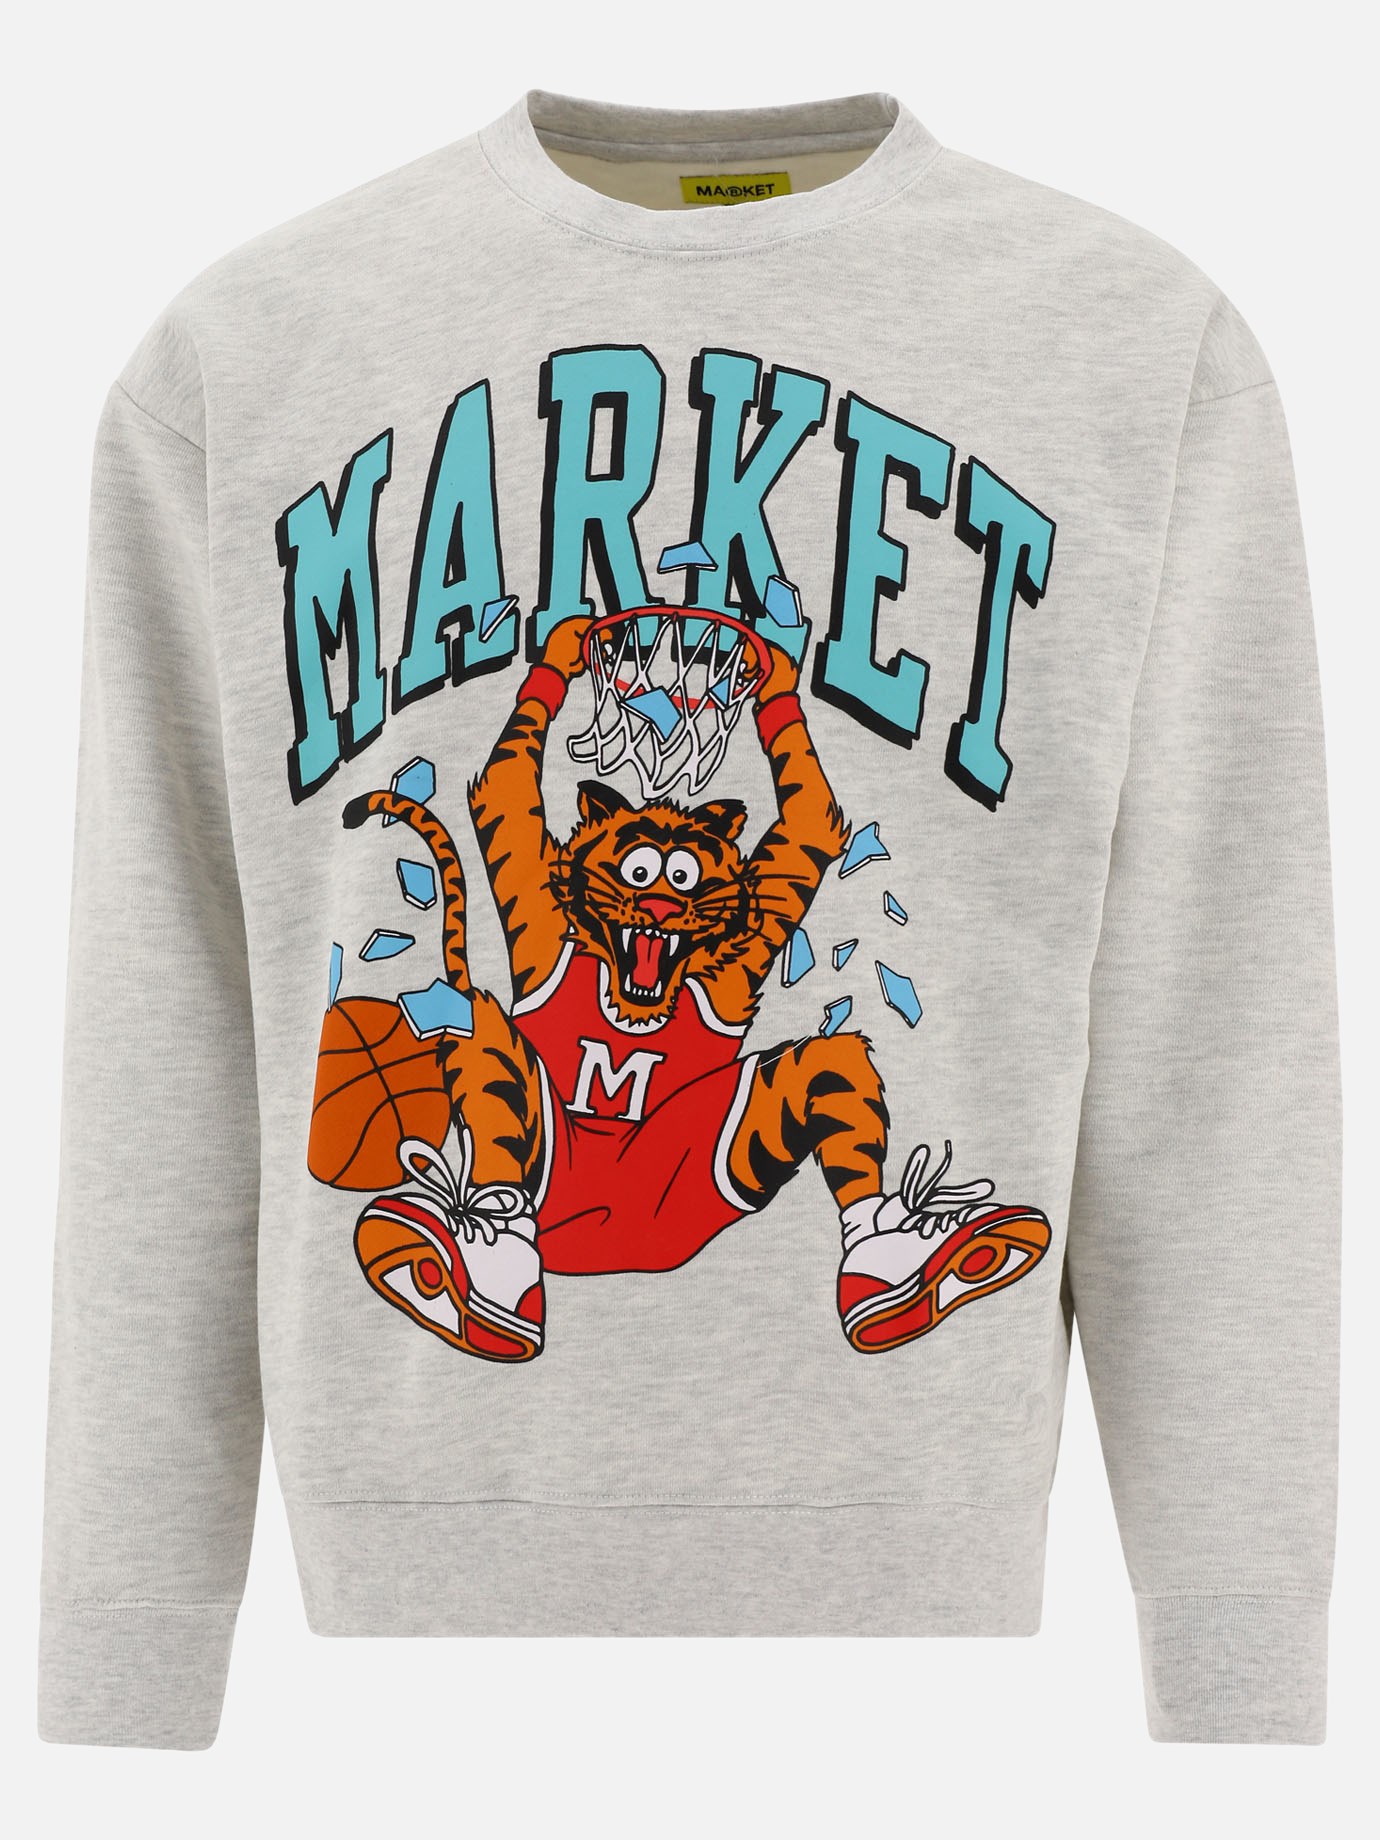  Market Dunking Cat  sweatshirt by Market